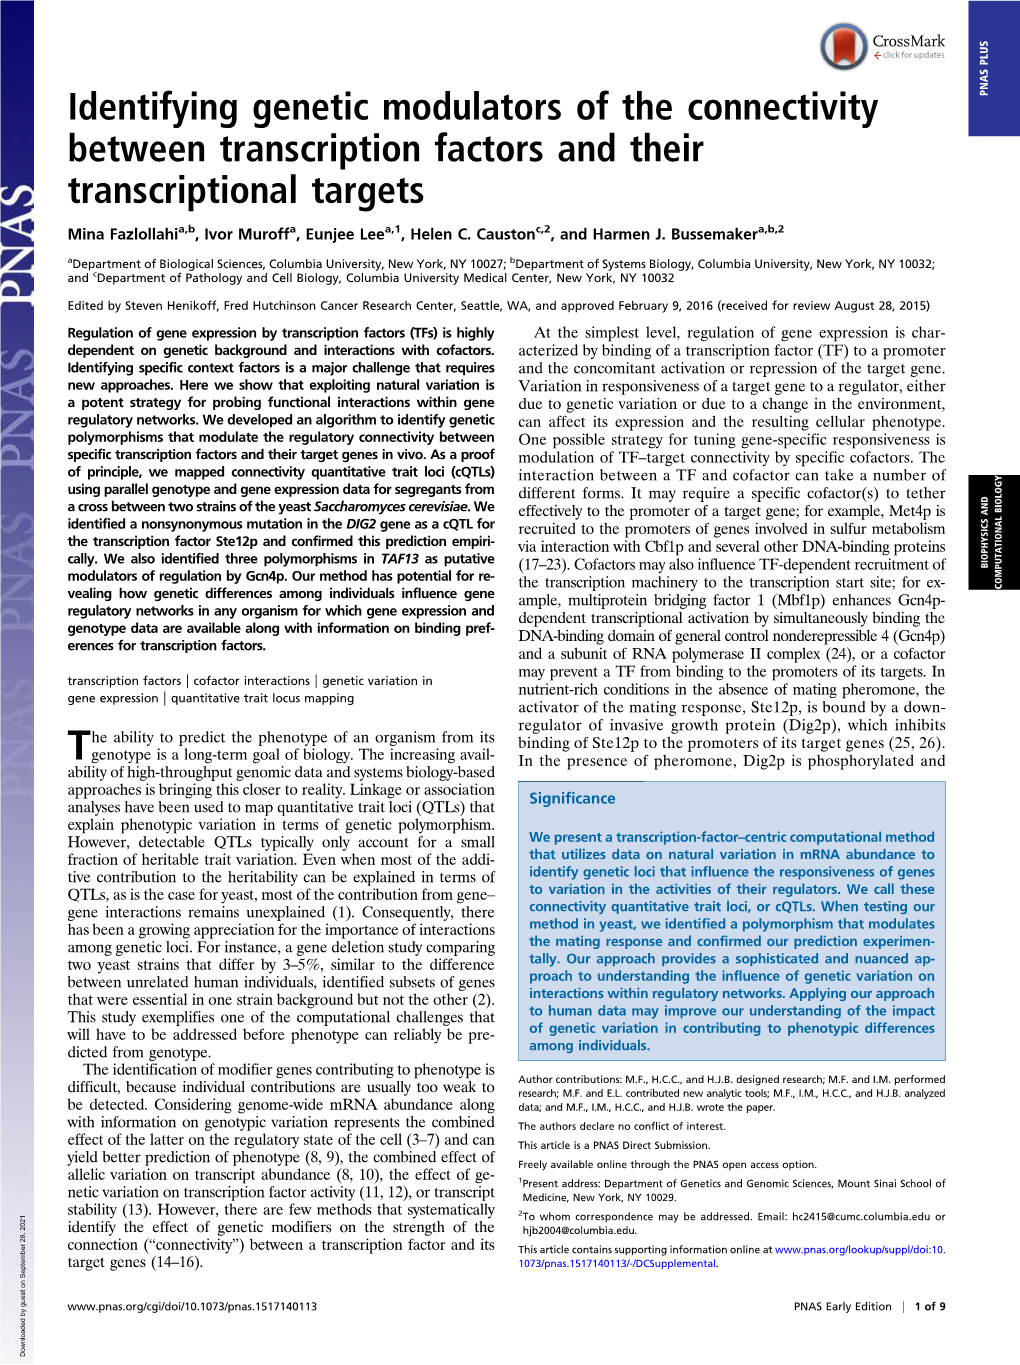 Identifying Genetic Modulators of the Connectivity Between Transcription